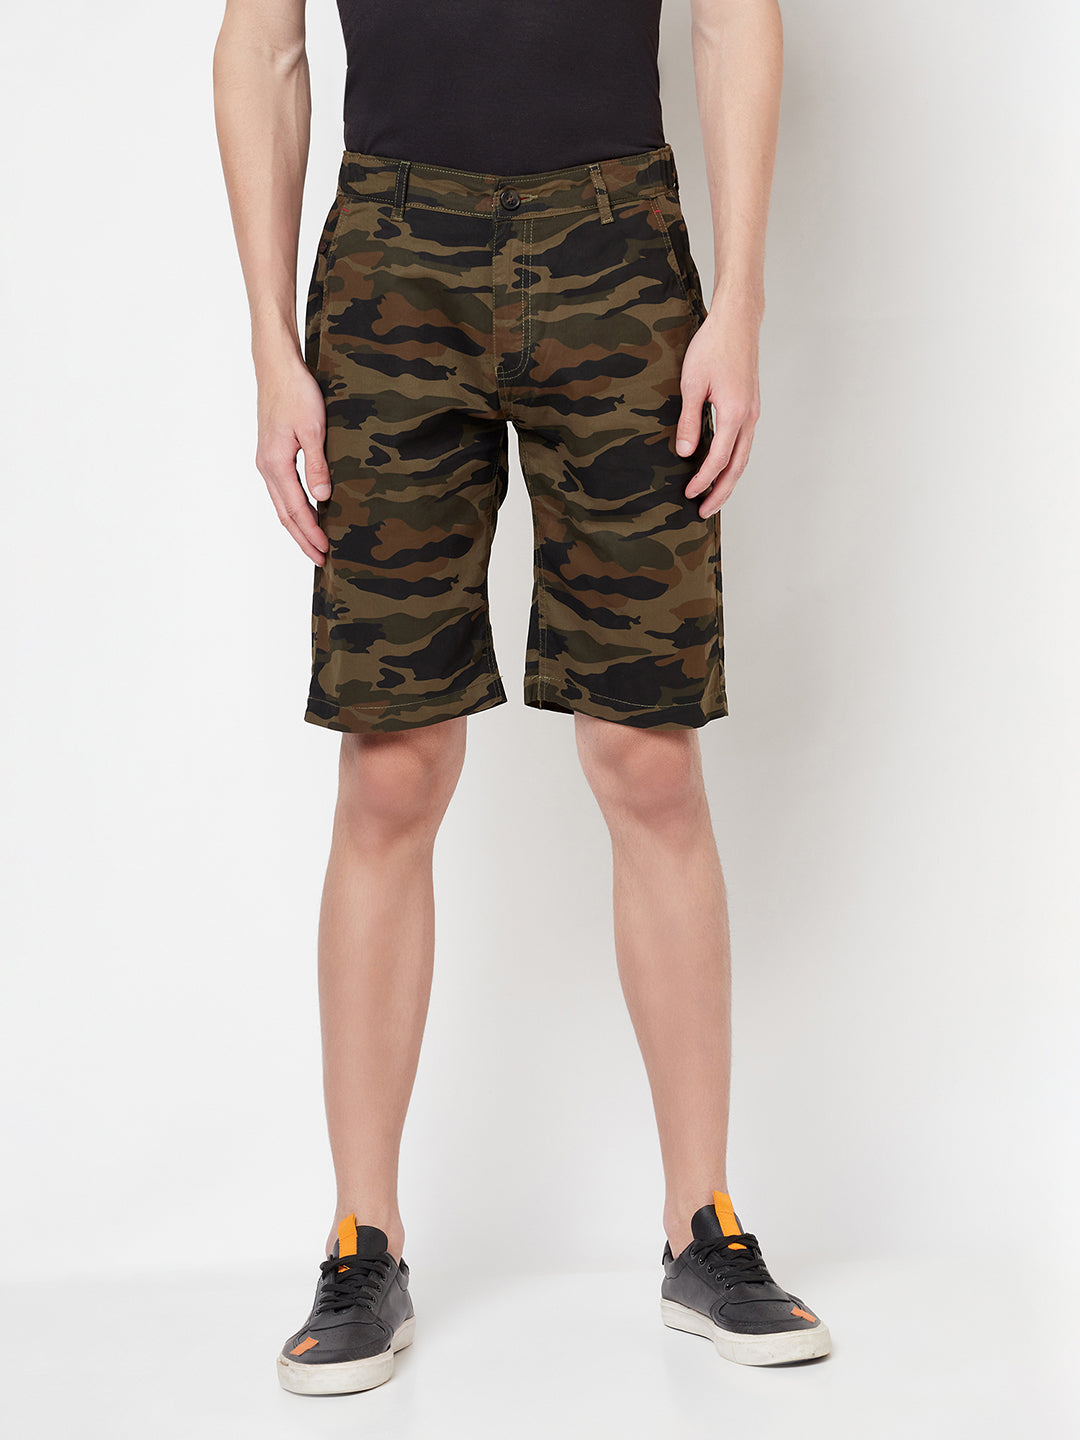 Olive Camouflage Printed Shorts - Men Shorts